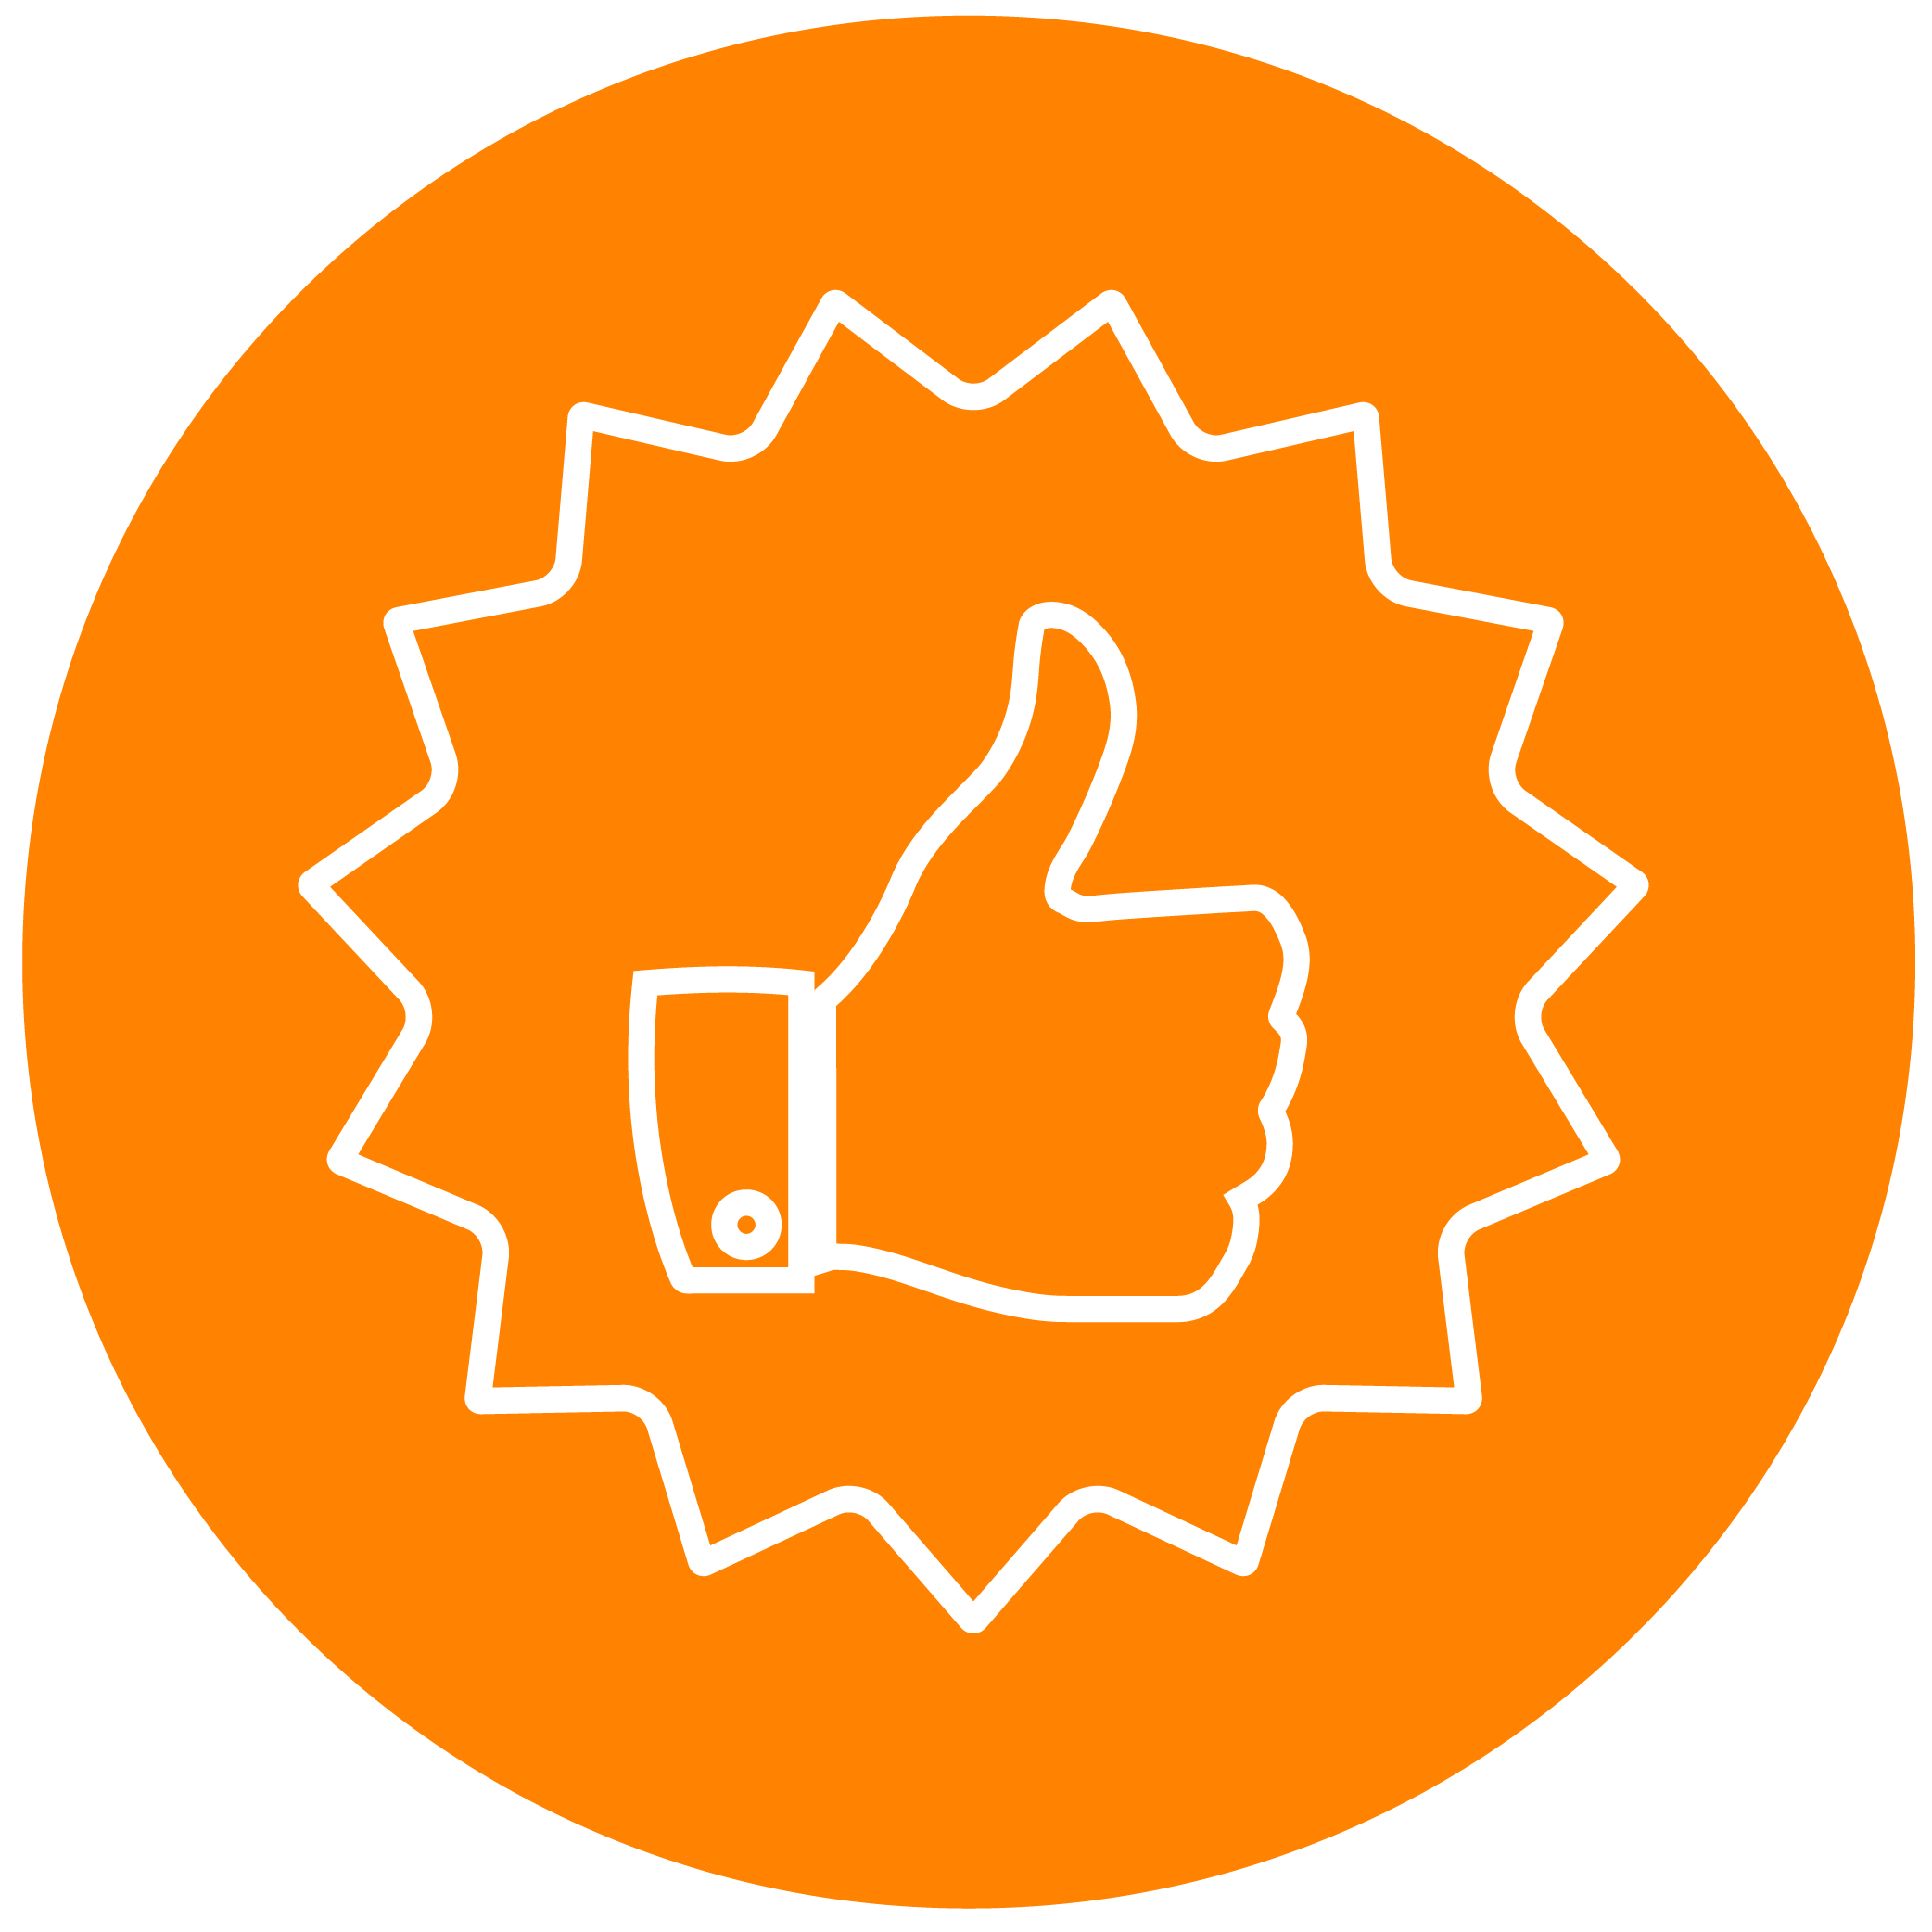 White Thumbs-up icon on orange background